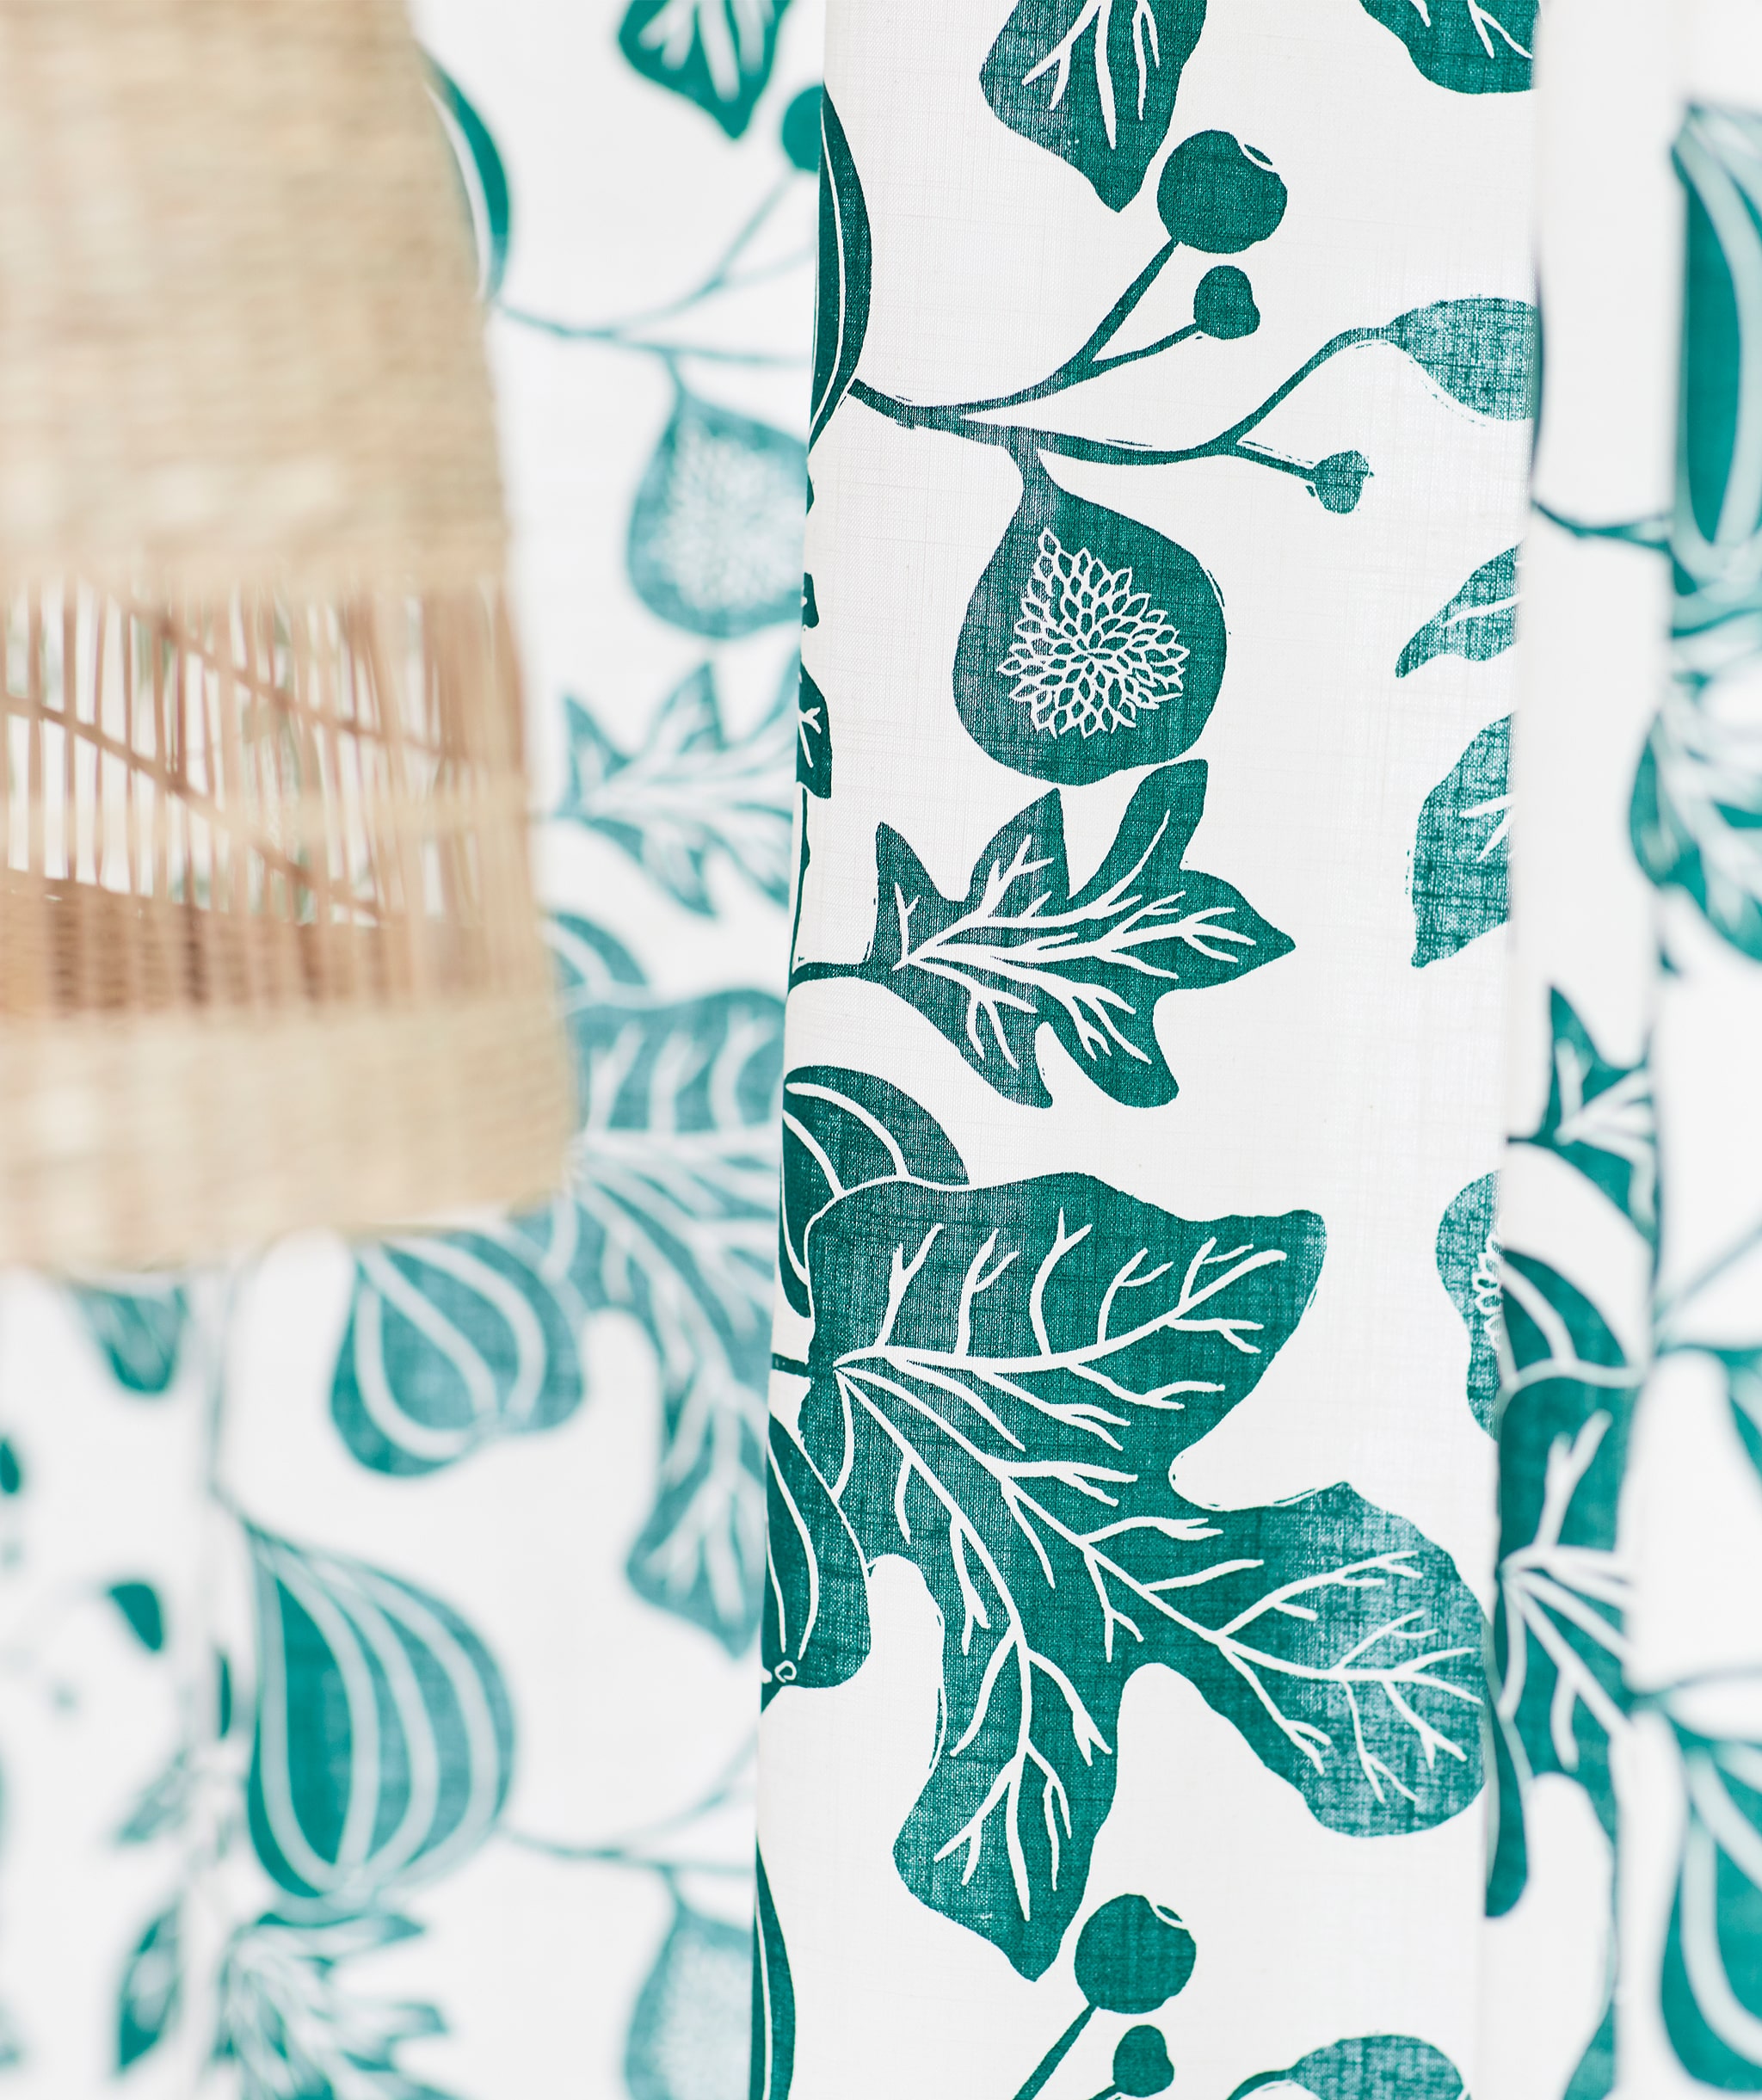 Tirai putih dengan pola ranting pohon ara warna hijau, berada di sebelah lampu plafon yang terbuat dari serat pisang alami.